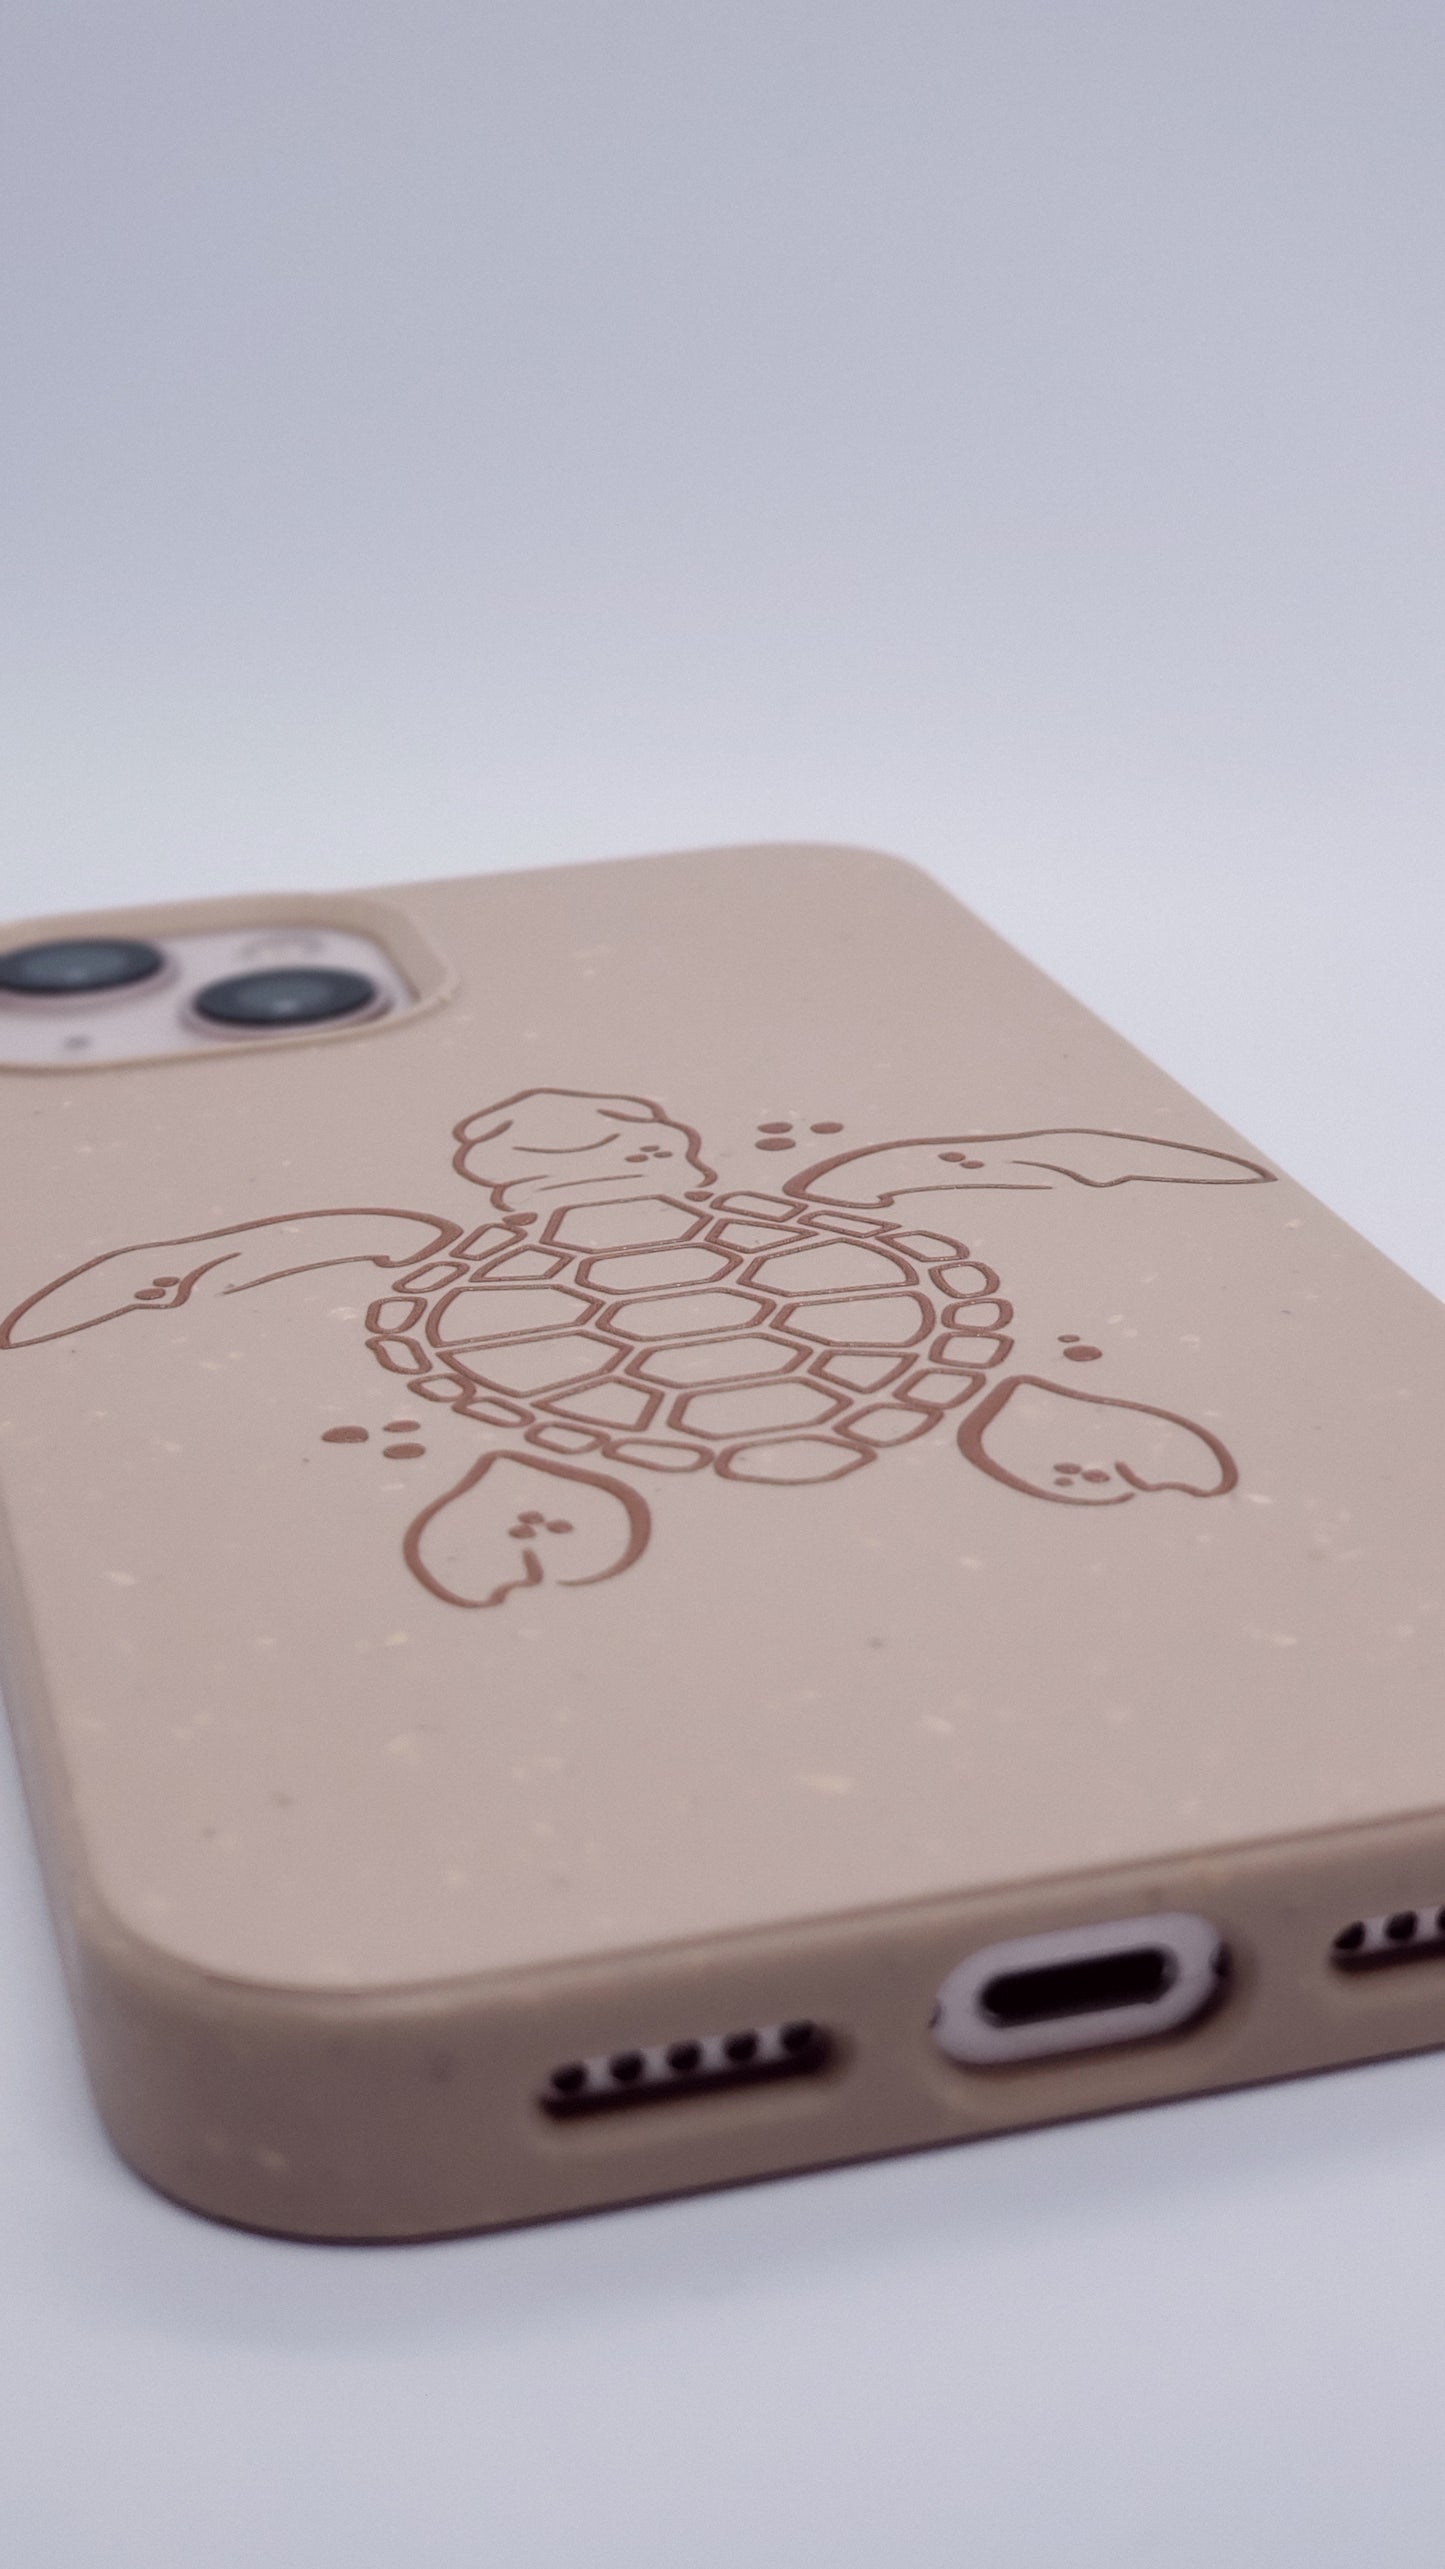 Coque iPhone compostable biodégradable tortue océan rose sable